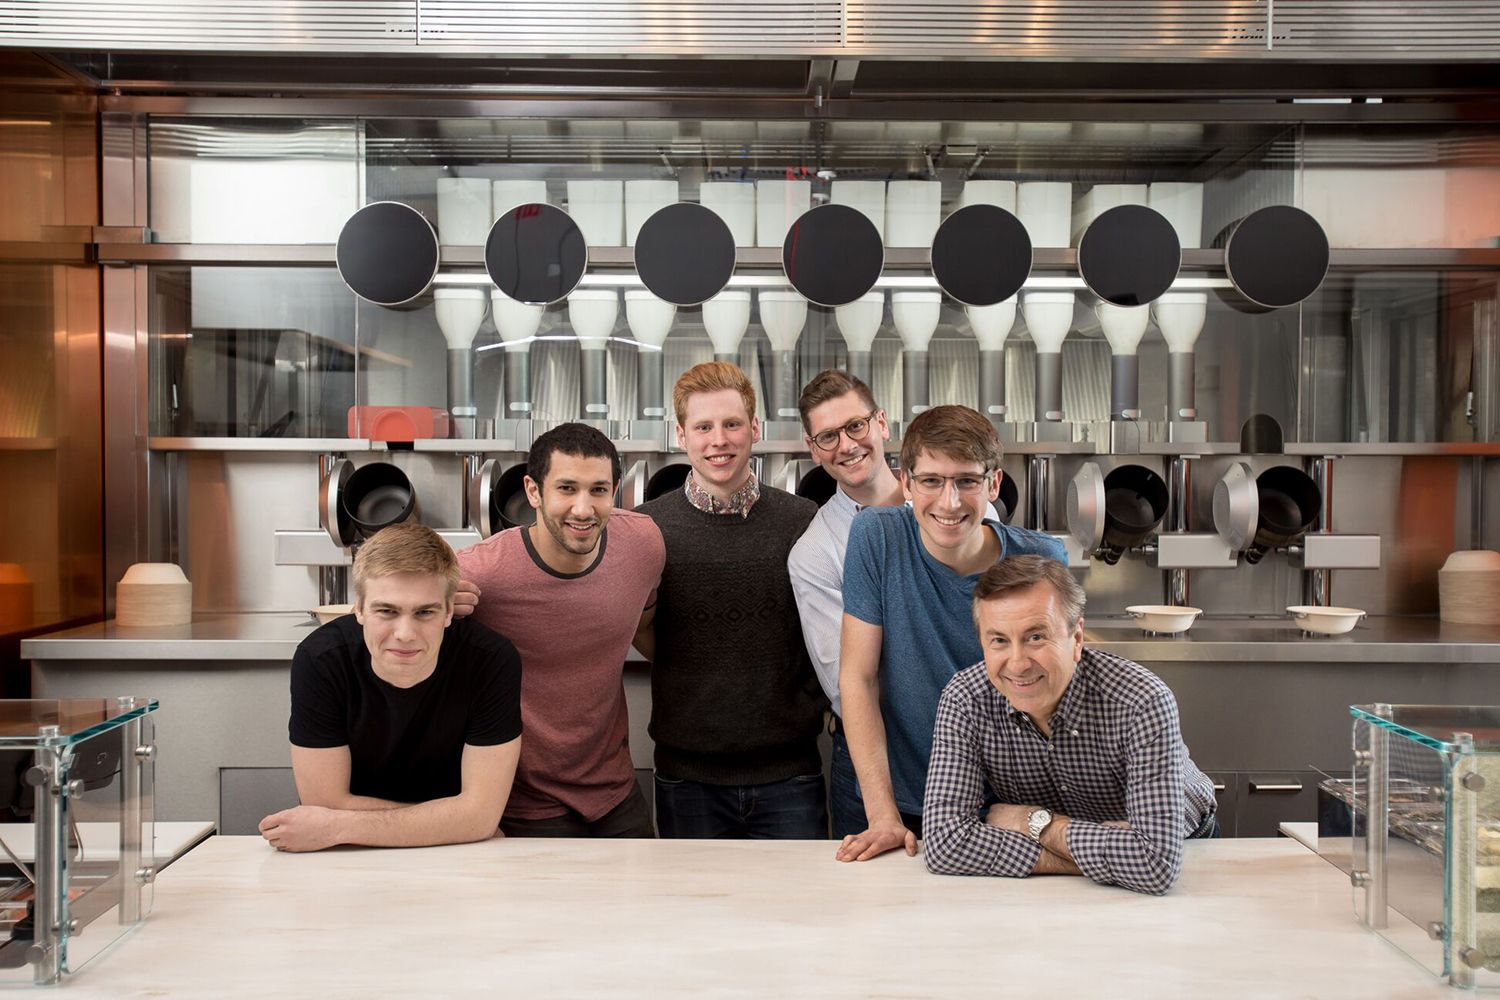 Alumni-founded robotic kitchen cooks up tasty meals